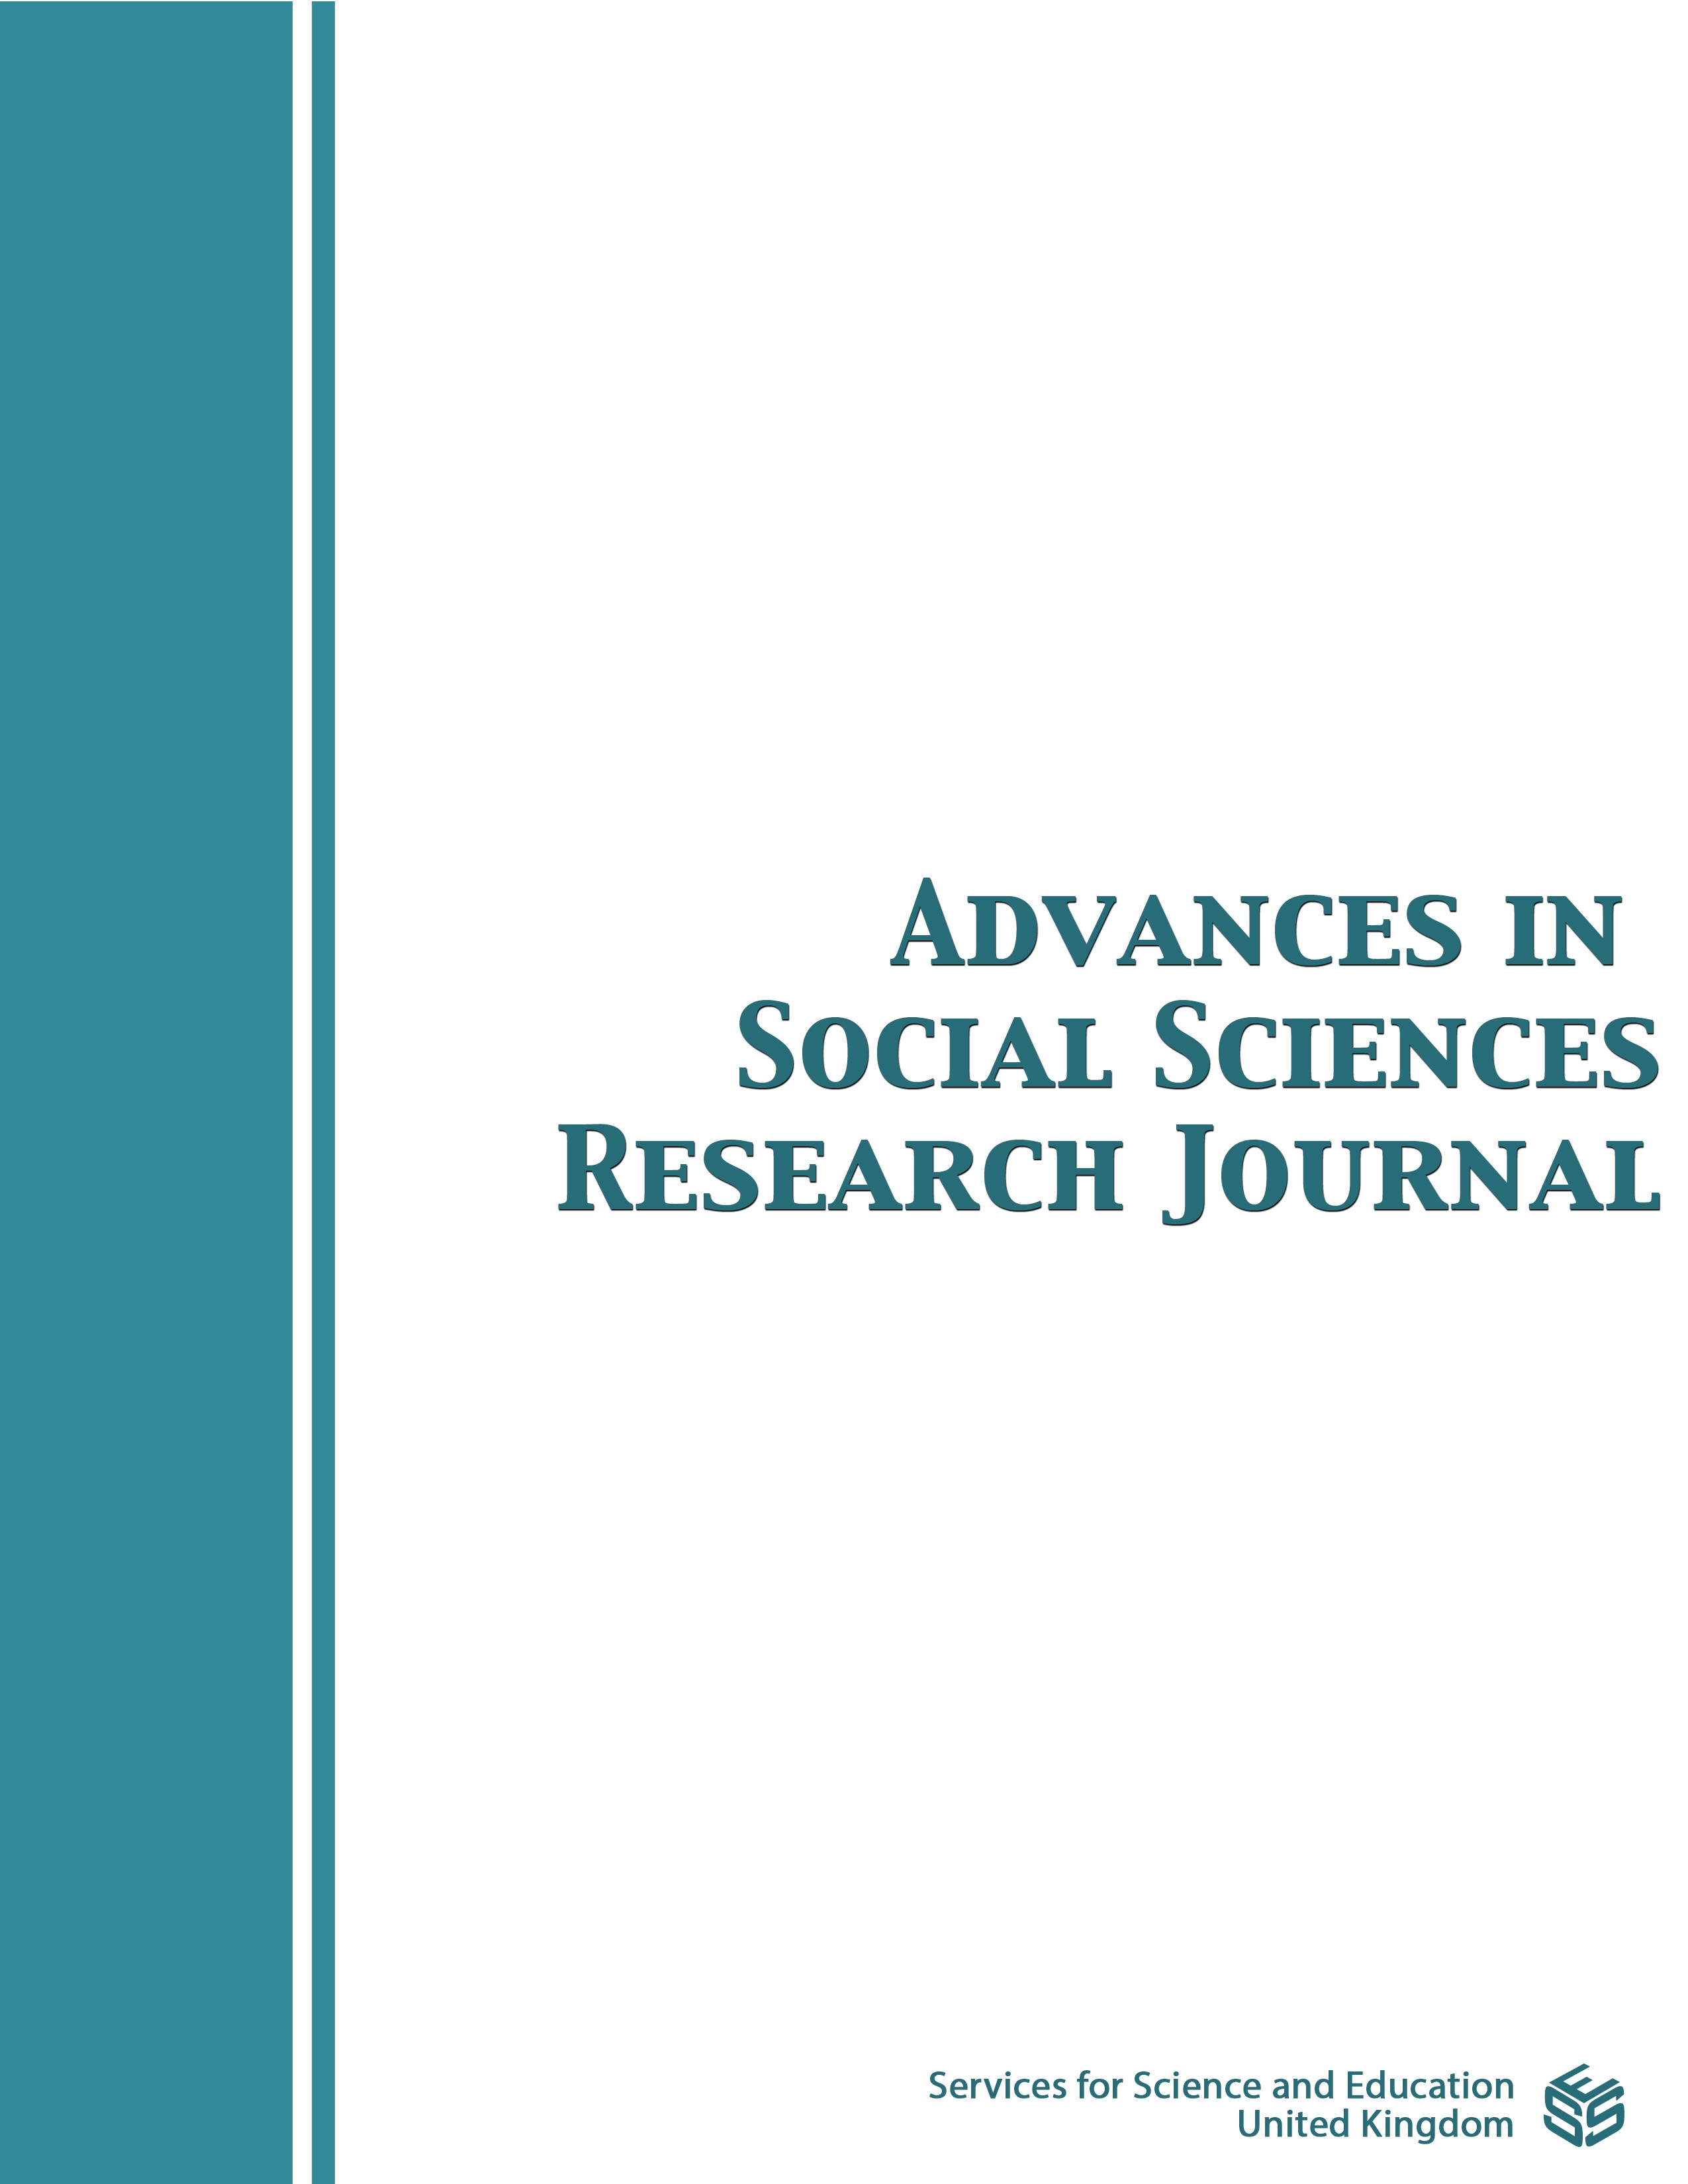 					View Vol. 8 No. 6 (2021): Advances in Social Sciences Research Journal 
				